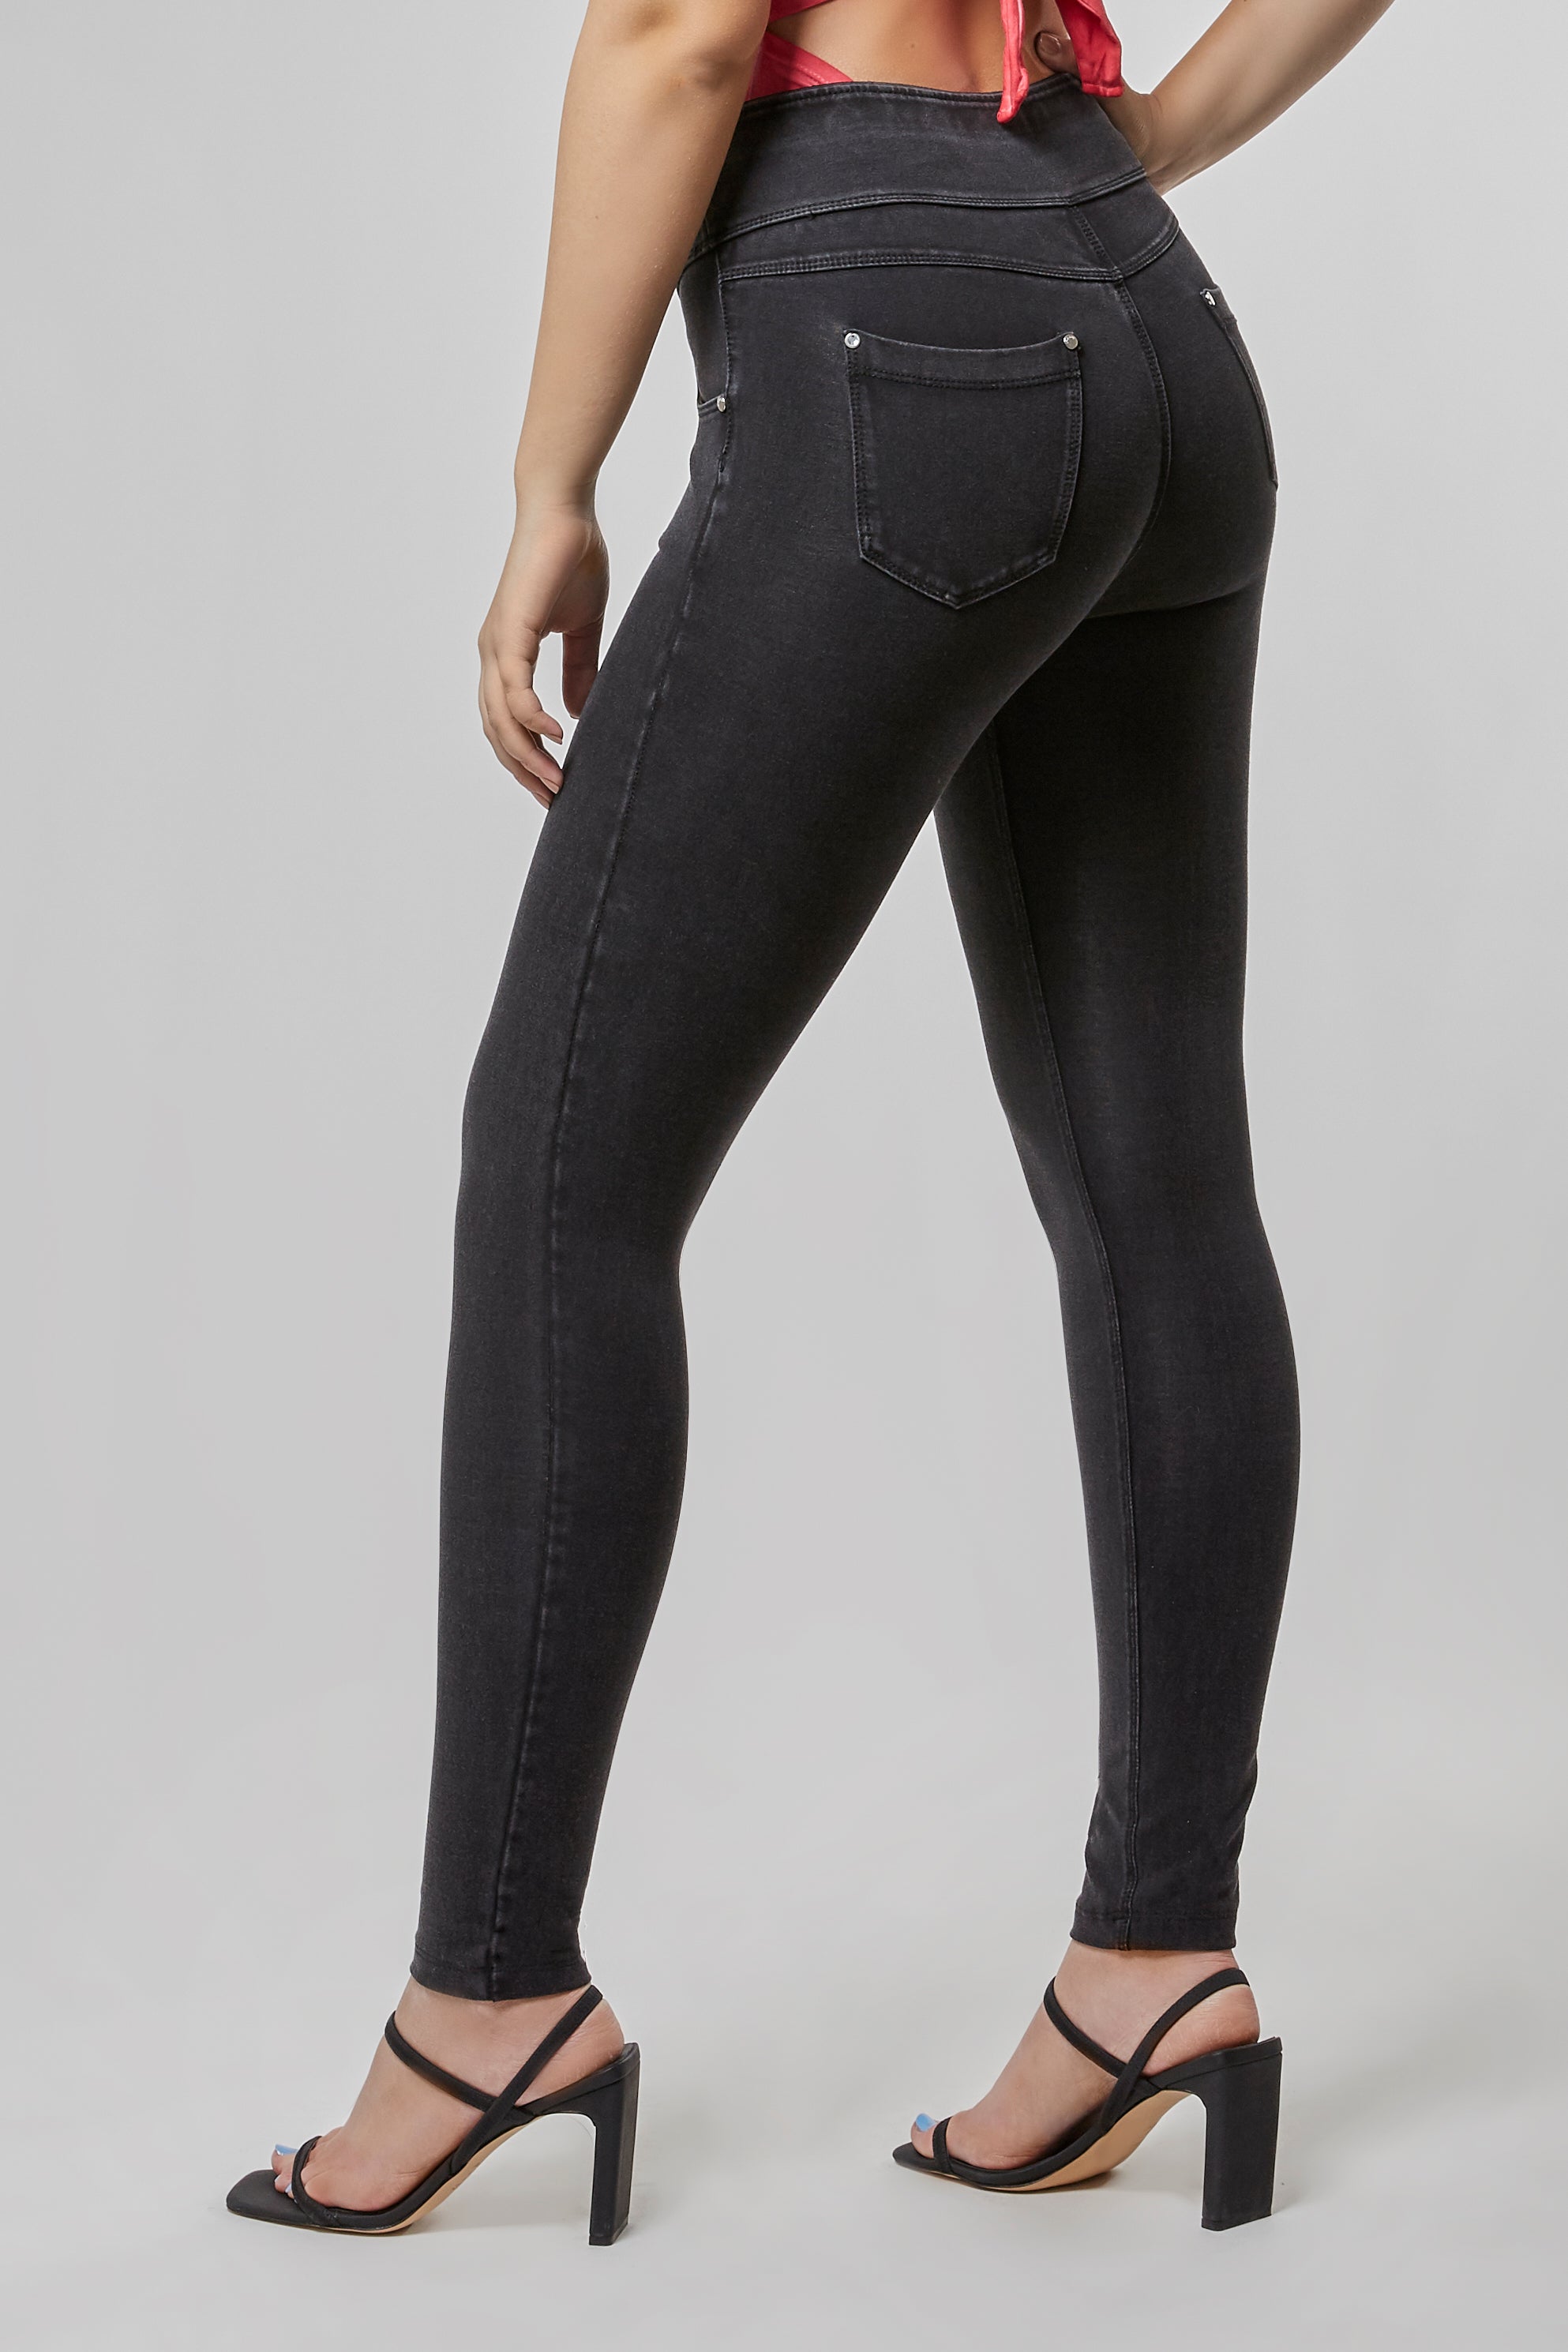 Yoga Leggings Tall Women High Rise Fashion Jean Classic Solid